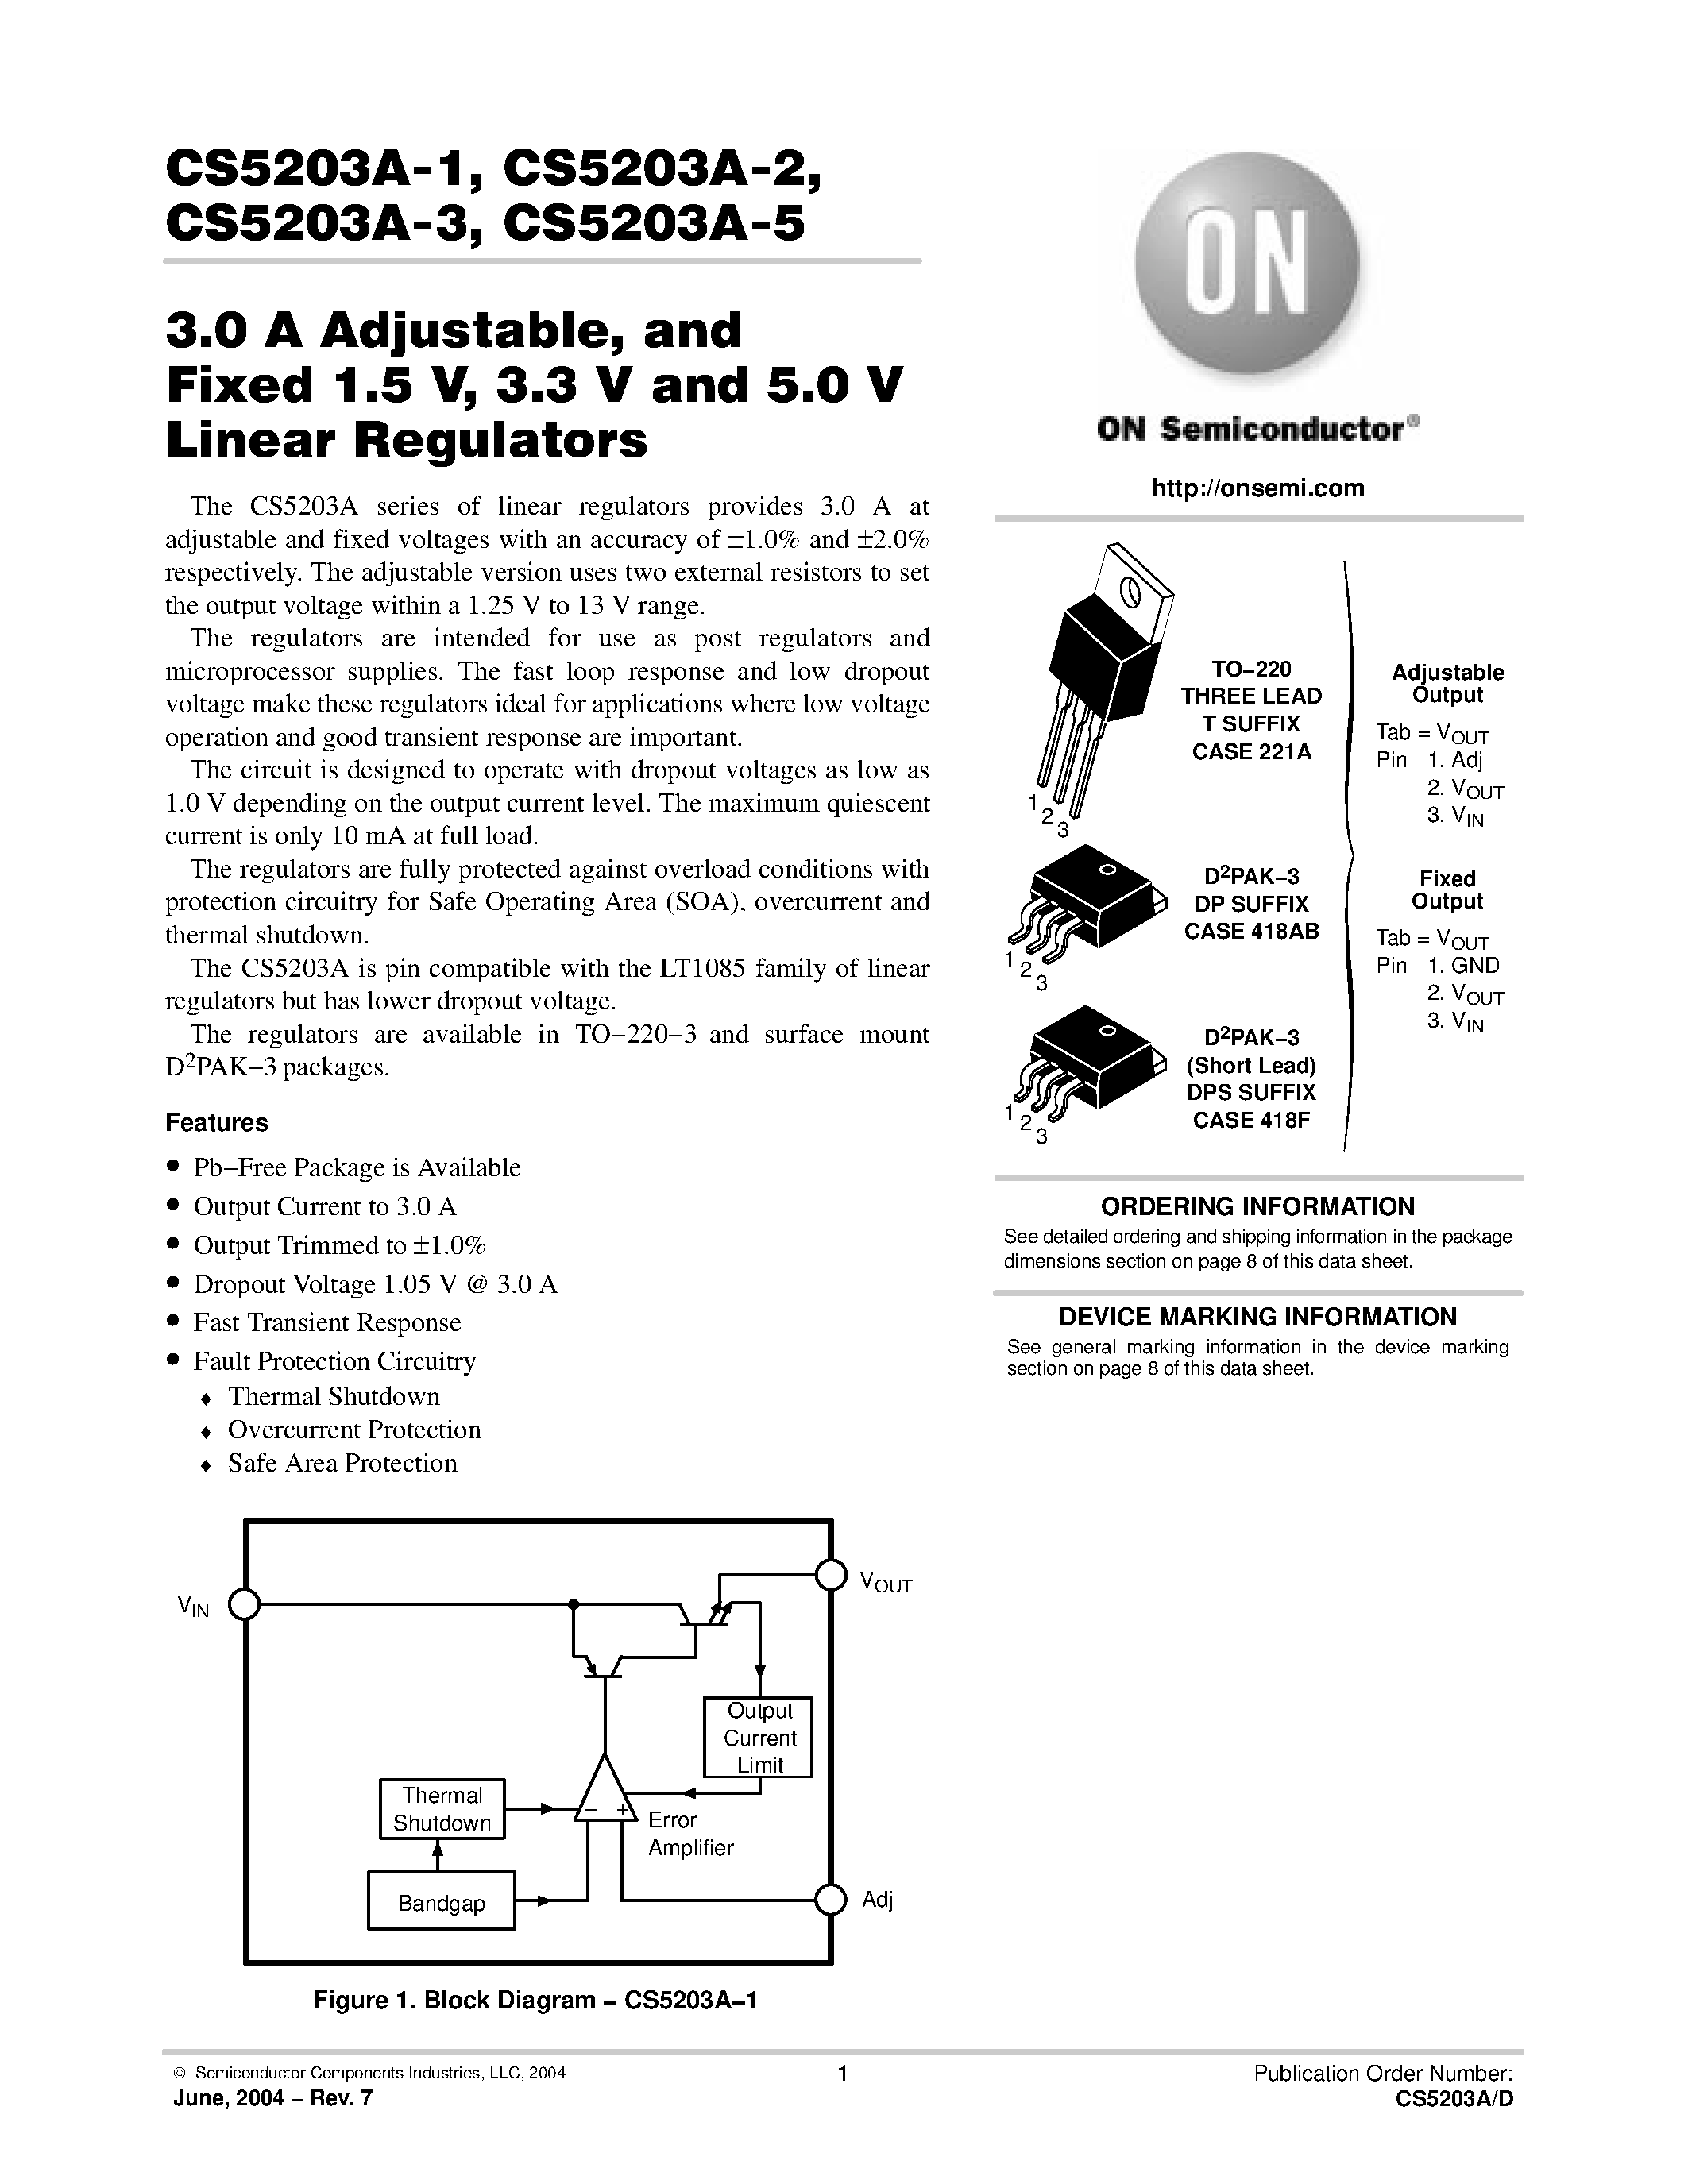 Datasheet CS5203A-3 - 3.0 A Adjustable/ and Fixed 1.5 V/ 3.3 V and 5.0 V Linear Regulators page 1